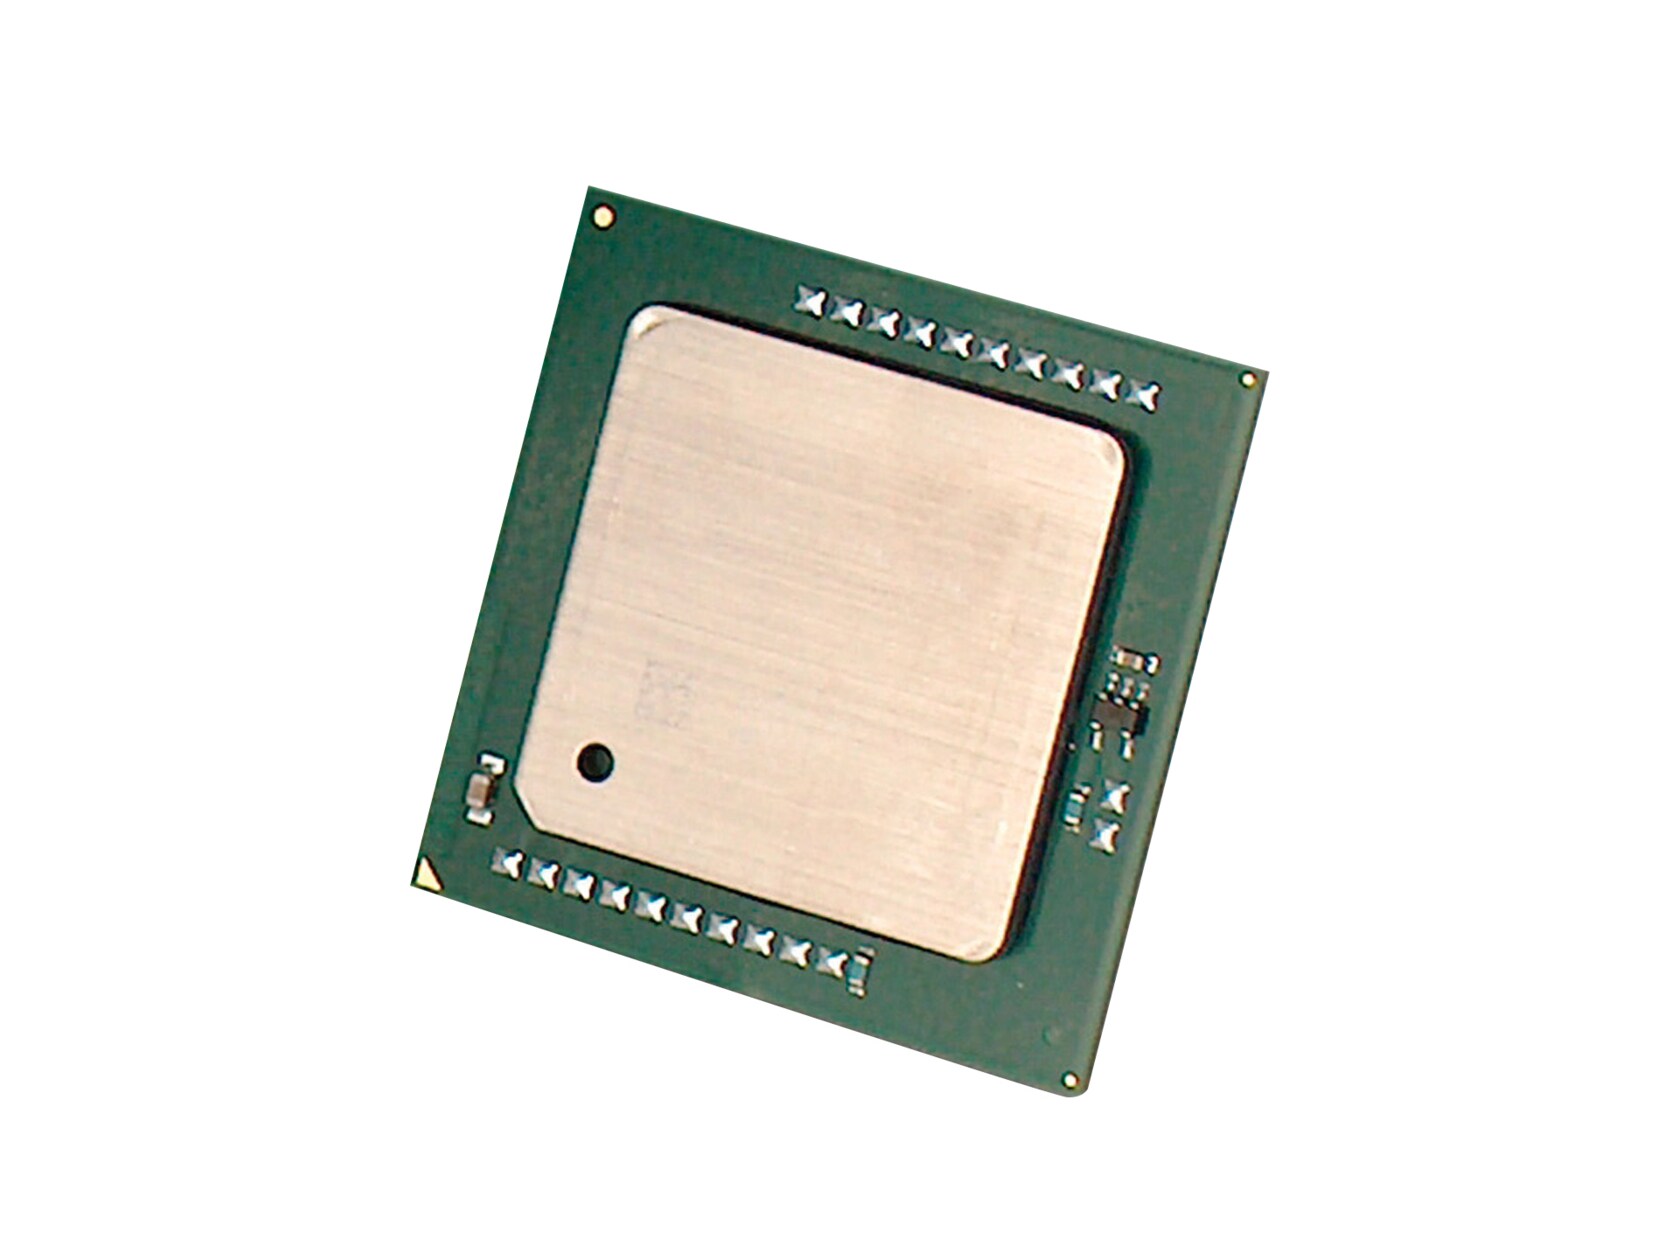 HPE DL360 Gen10 Intel Xeon-Platinum 8260Y (2.4GHz) Processor Kit